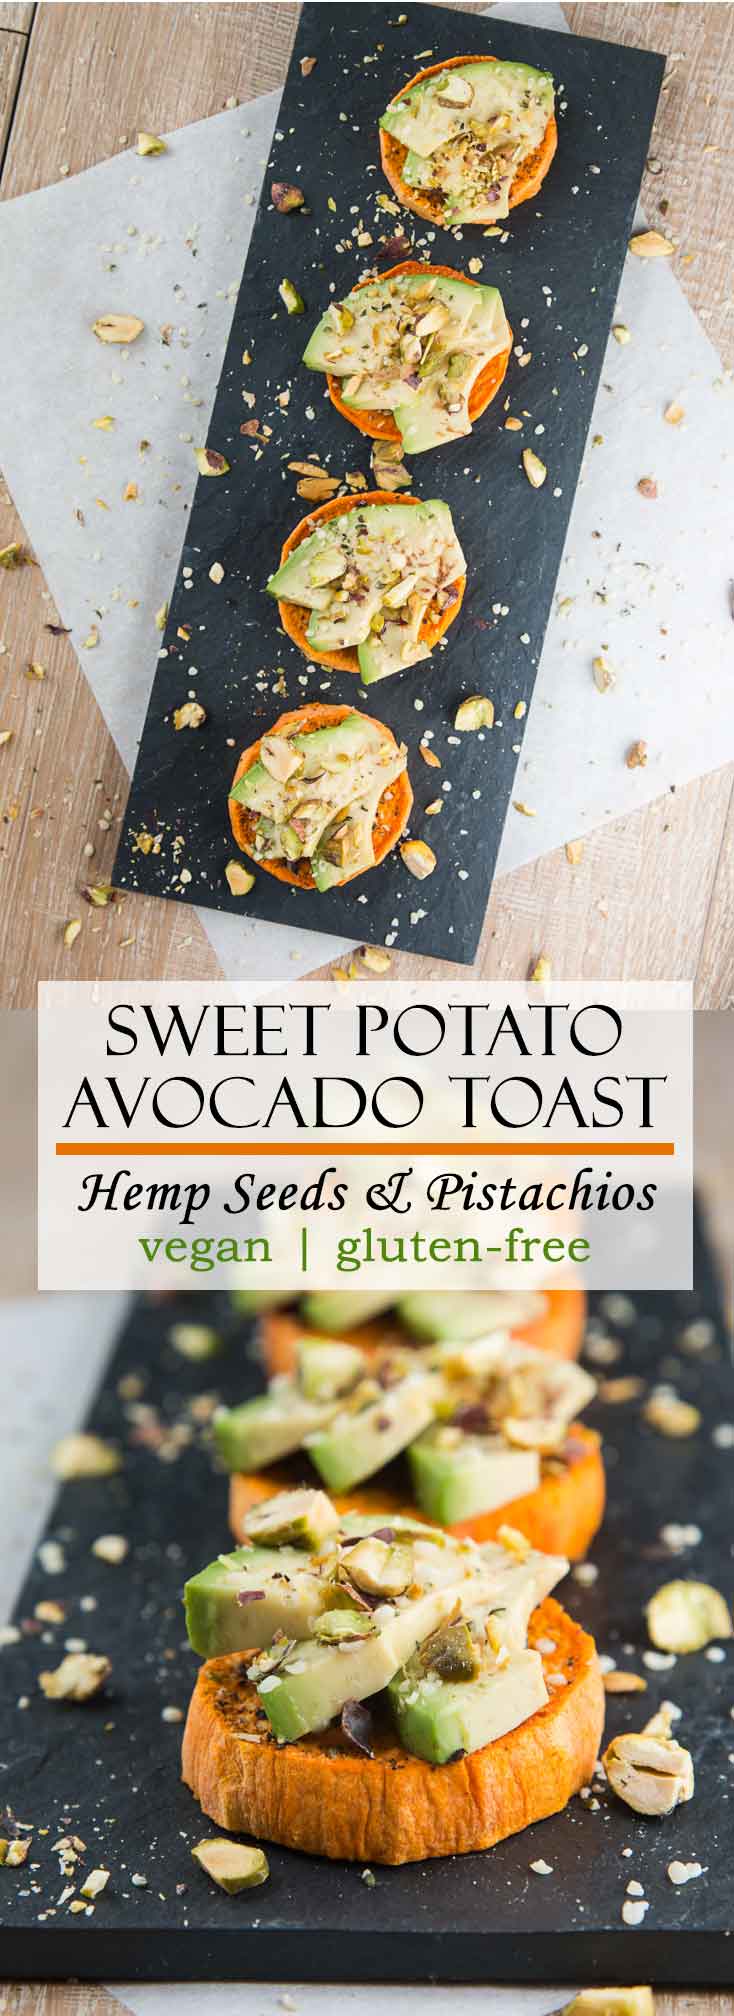 Sweet Potato Avocado Toast with Pistachios & Hemp Seeds #vegan #glutenfree #healthy | www.VegetarianGastronomy.com